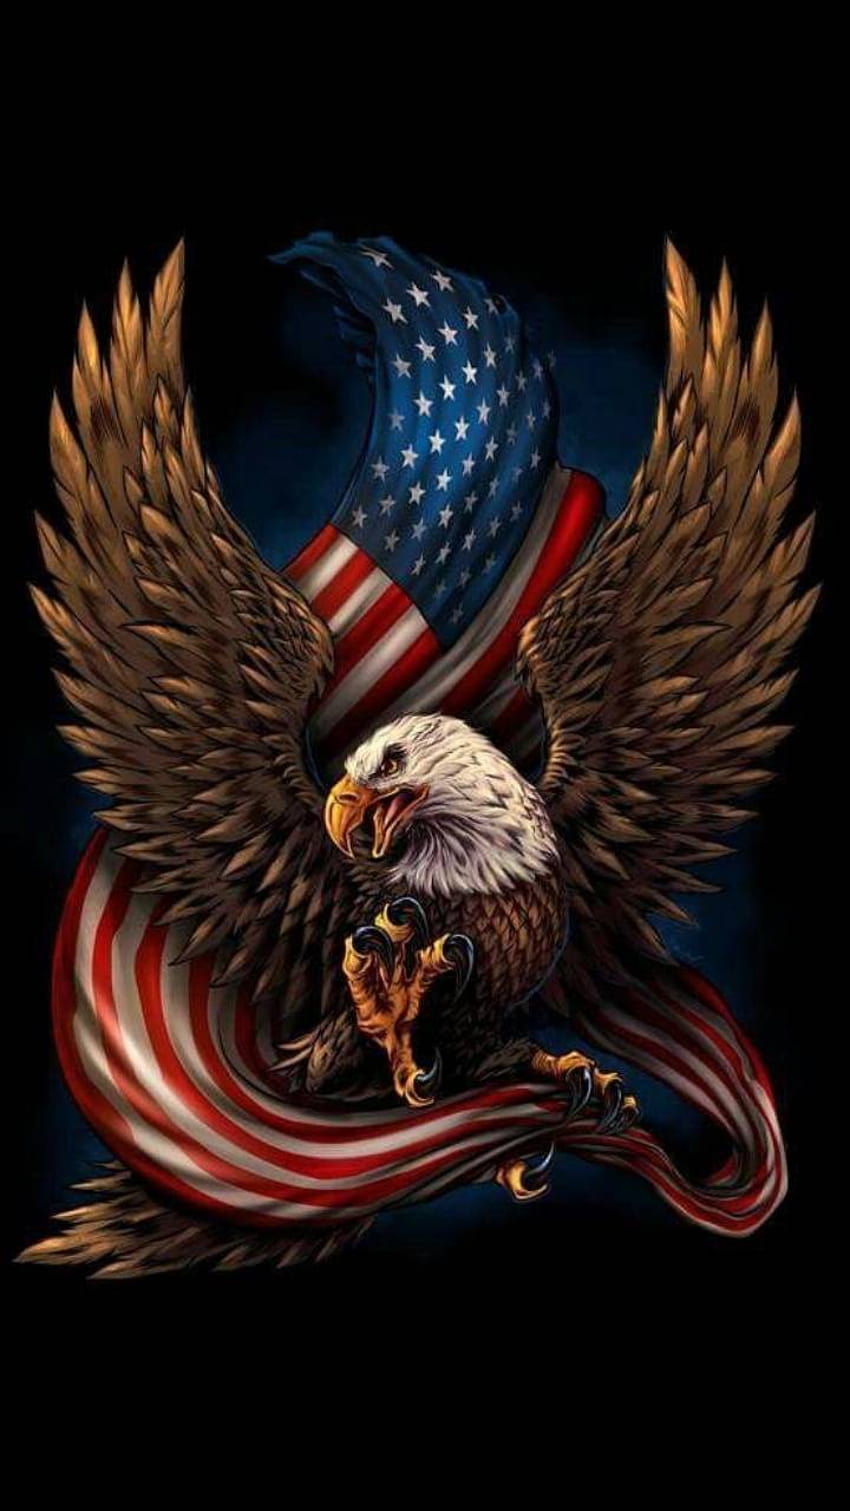 American Patriotic IPhone 5 wallpaper by PheksyBloo on DeviantArt